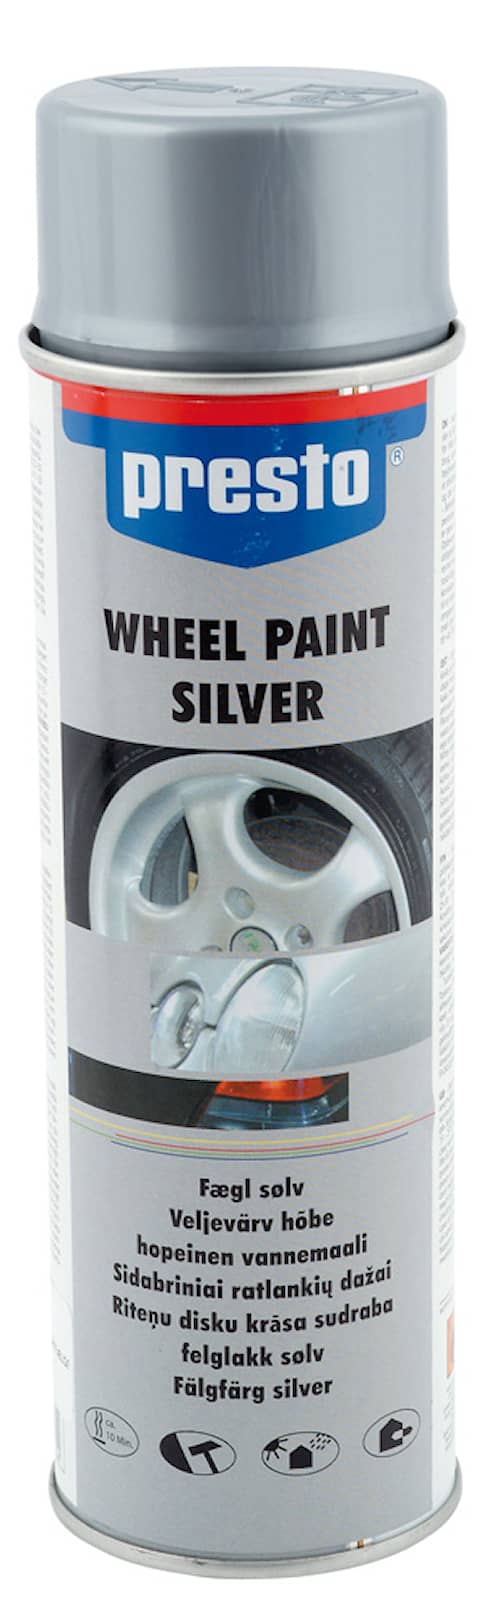 Presto Akrylsprayfärg för fälgar Silver 500ml